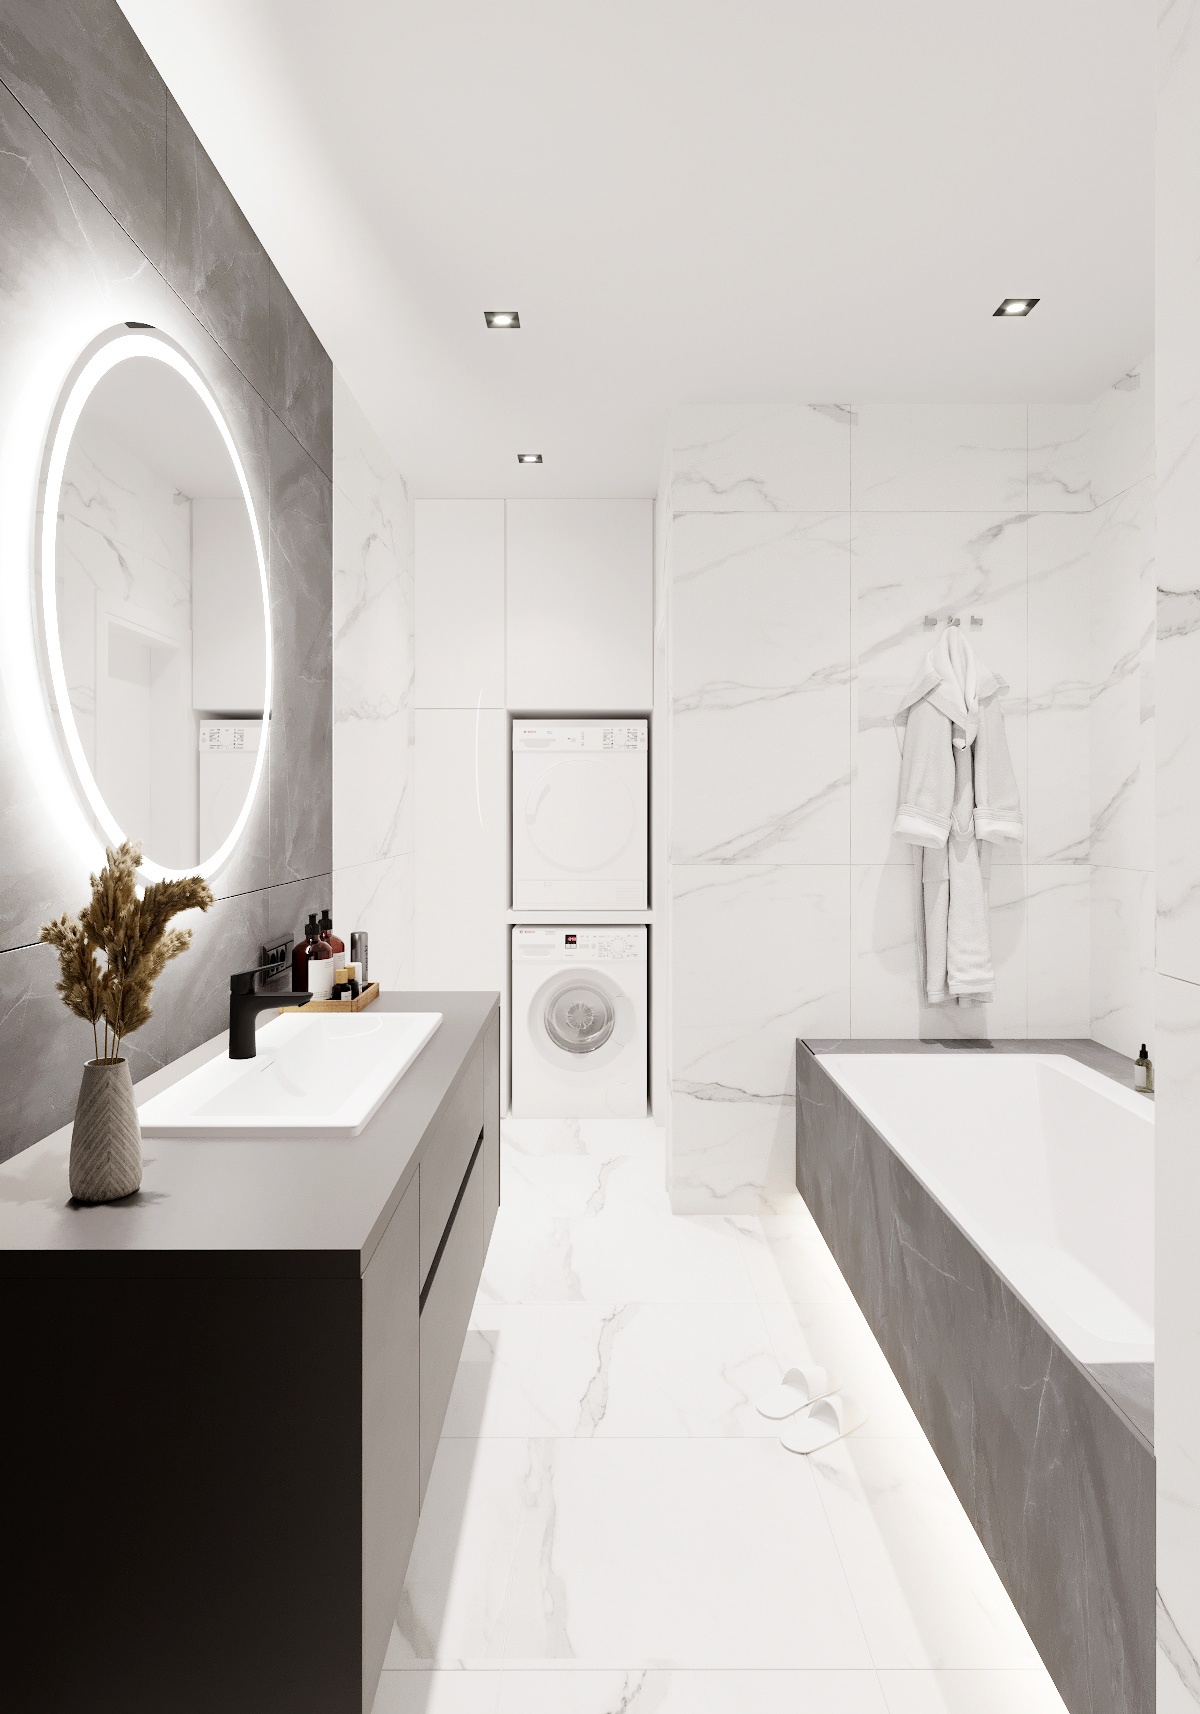 3ds max apartment design bathroom bedroom design interior Design Project kitchen living romm Minimalism